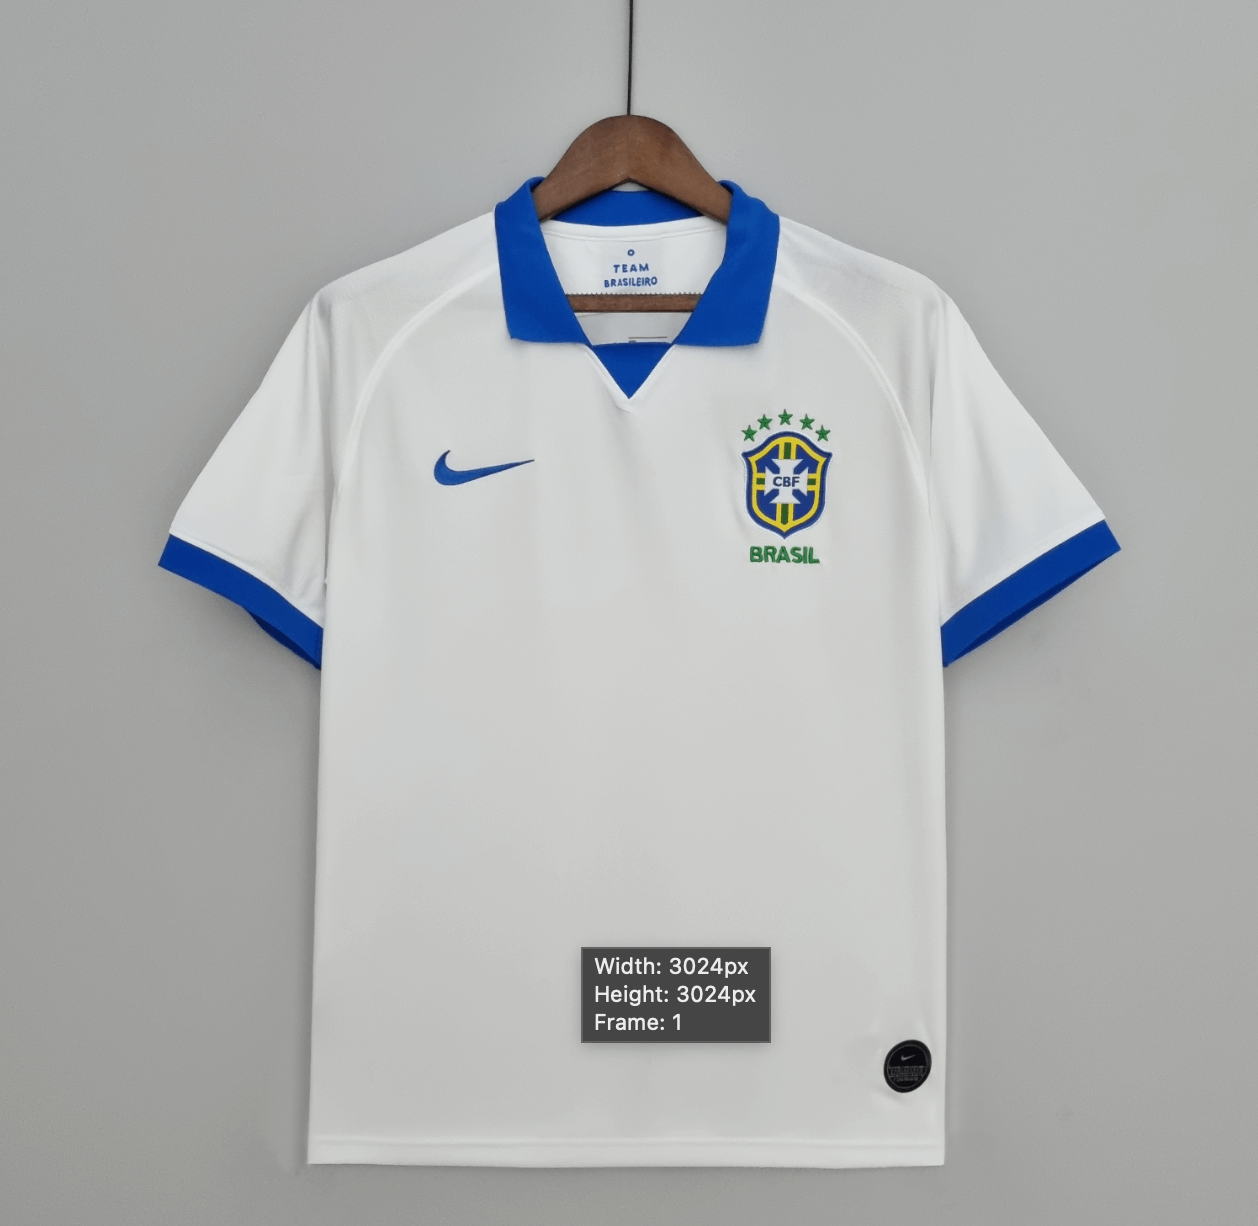 Brazil 2019 Away kit – The Football Heritage